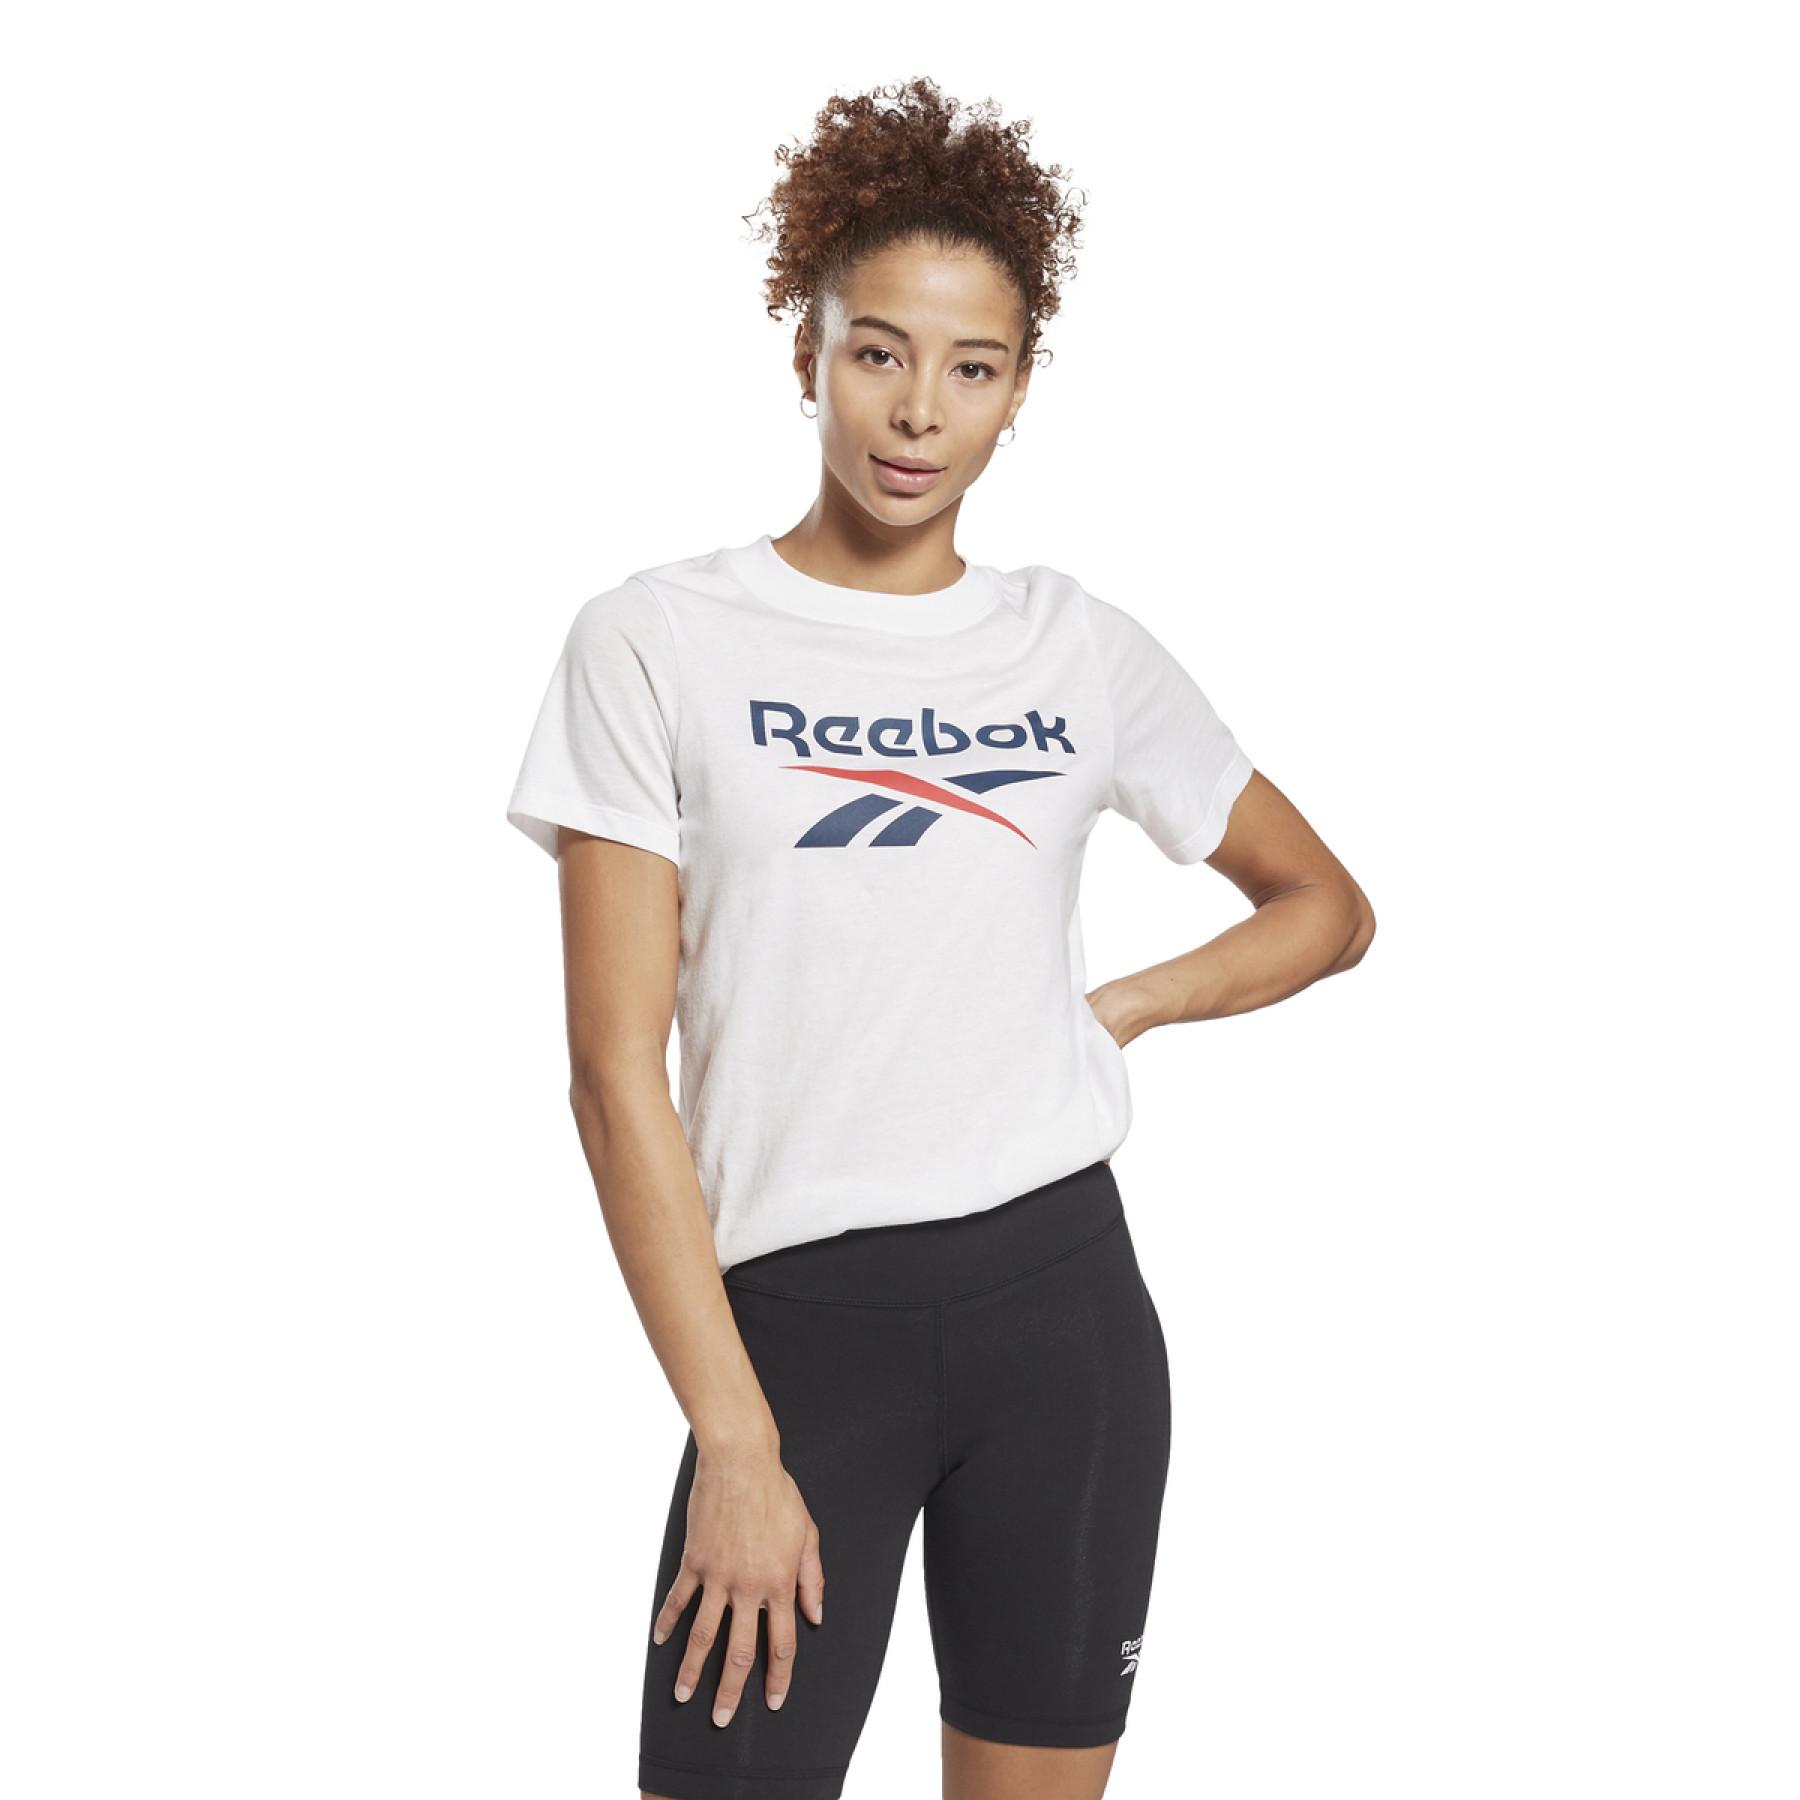 Frauen-T-Shirt Reebok Identity Logo